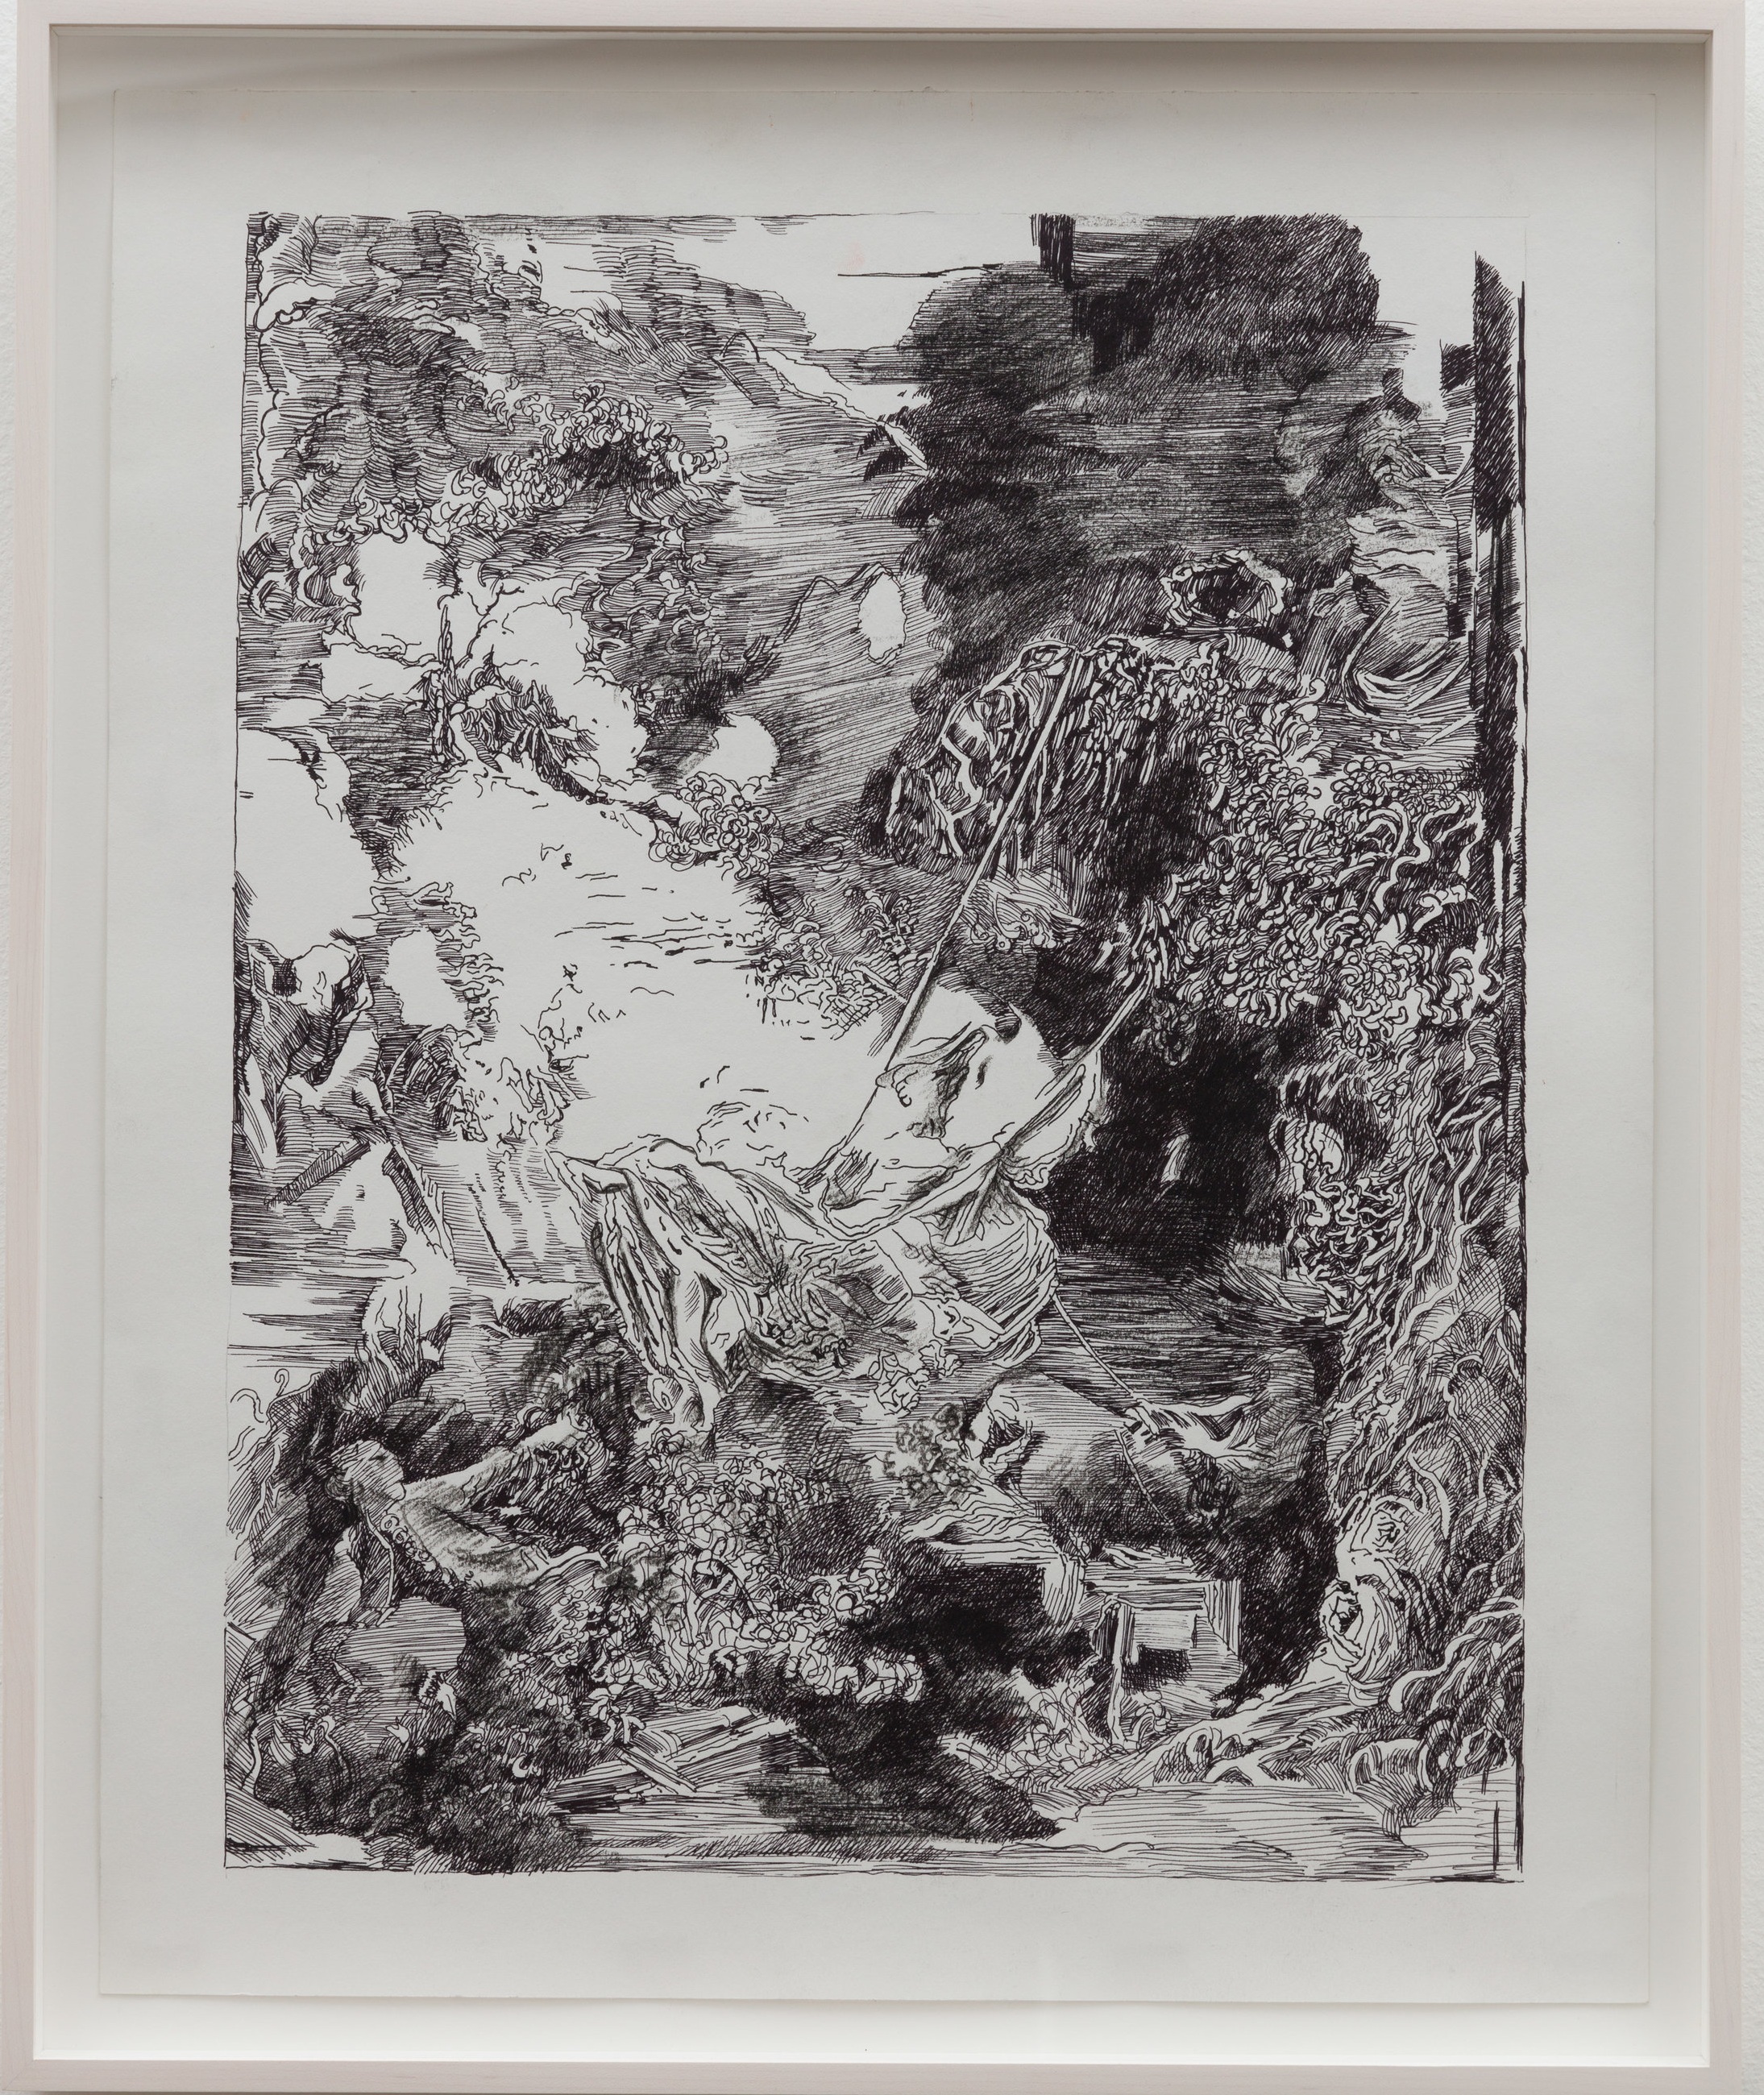 Chris Coy, FRAG-412, 2018, Graphite on paper, framed 20 x 16.5" [HxW] (50.8 x 41.91 cm) Courtesy the artist and Anat Ebgi